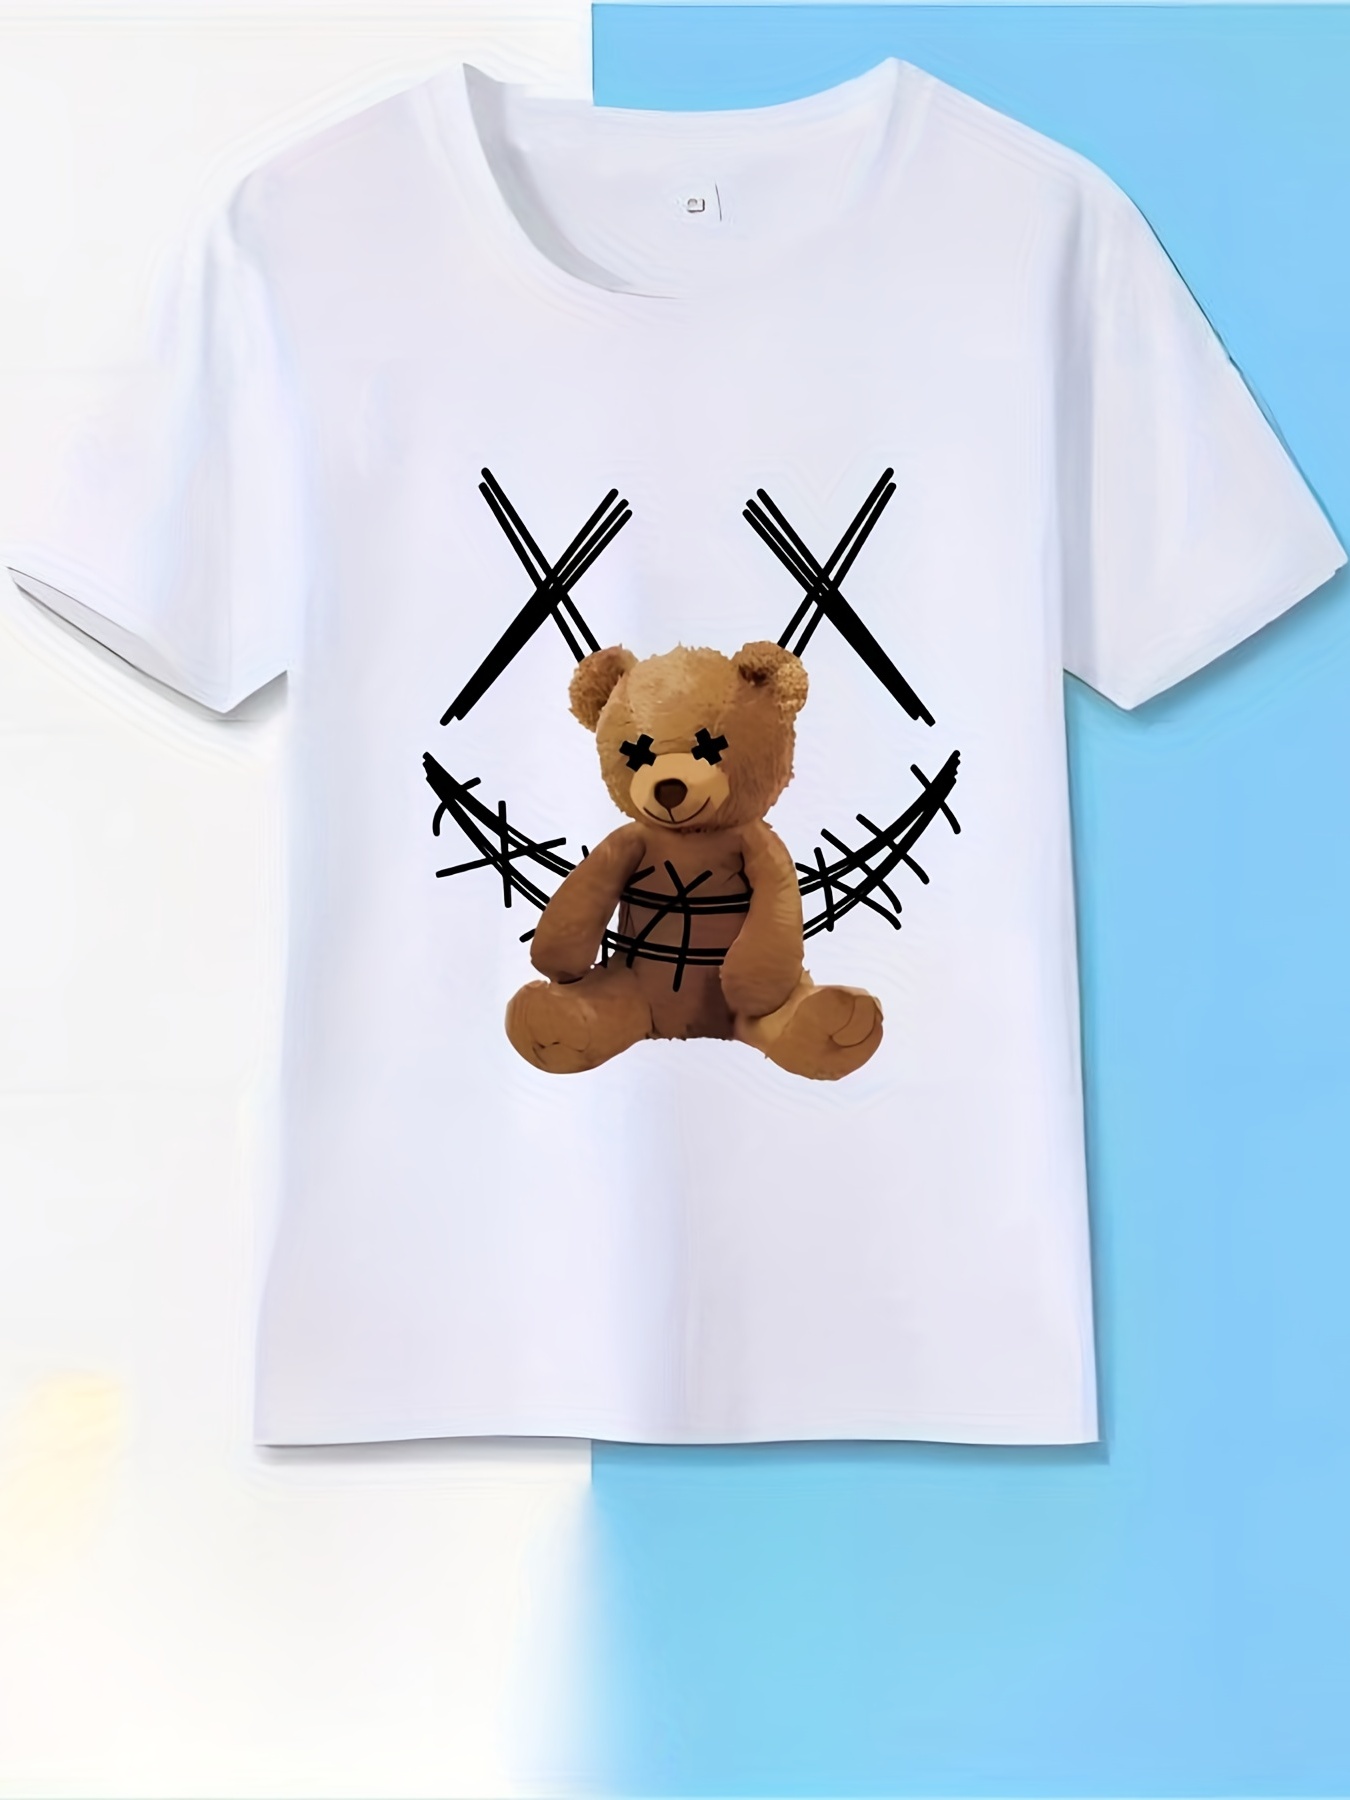 Roblox Print Kids T-shirt Short Sleeve Summer Casual Crew Neck Tee